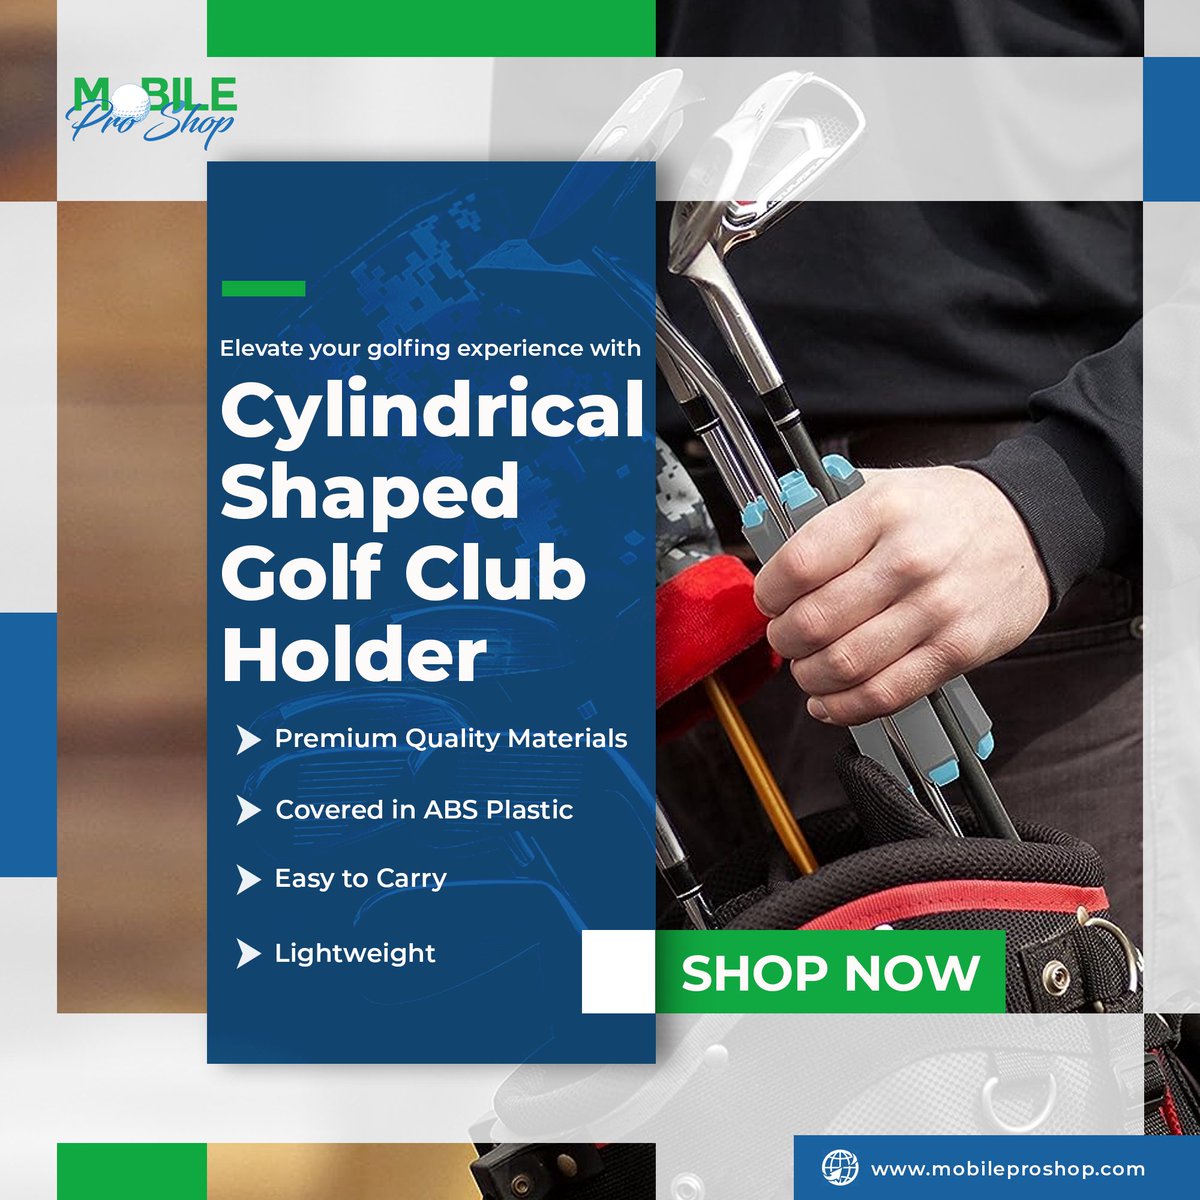 Elevate your golfing experience with Mobileproshop Premium Quality Golf Club Carrier!
#Mobileproshop #GolfClubCarrier #PremiumQuality #GolfGear #GolfAccessories #GolfLife #GolfEssentials #GolfingAdventures #GolfGiftIdea #GolfersParadise #shopnow